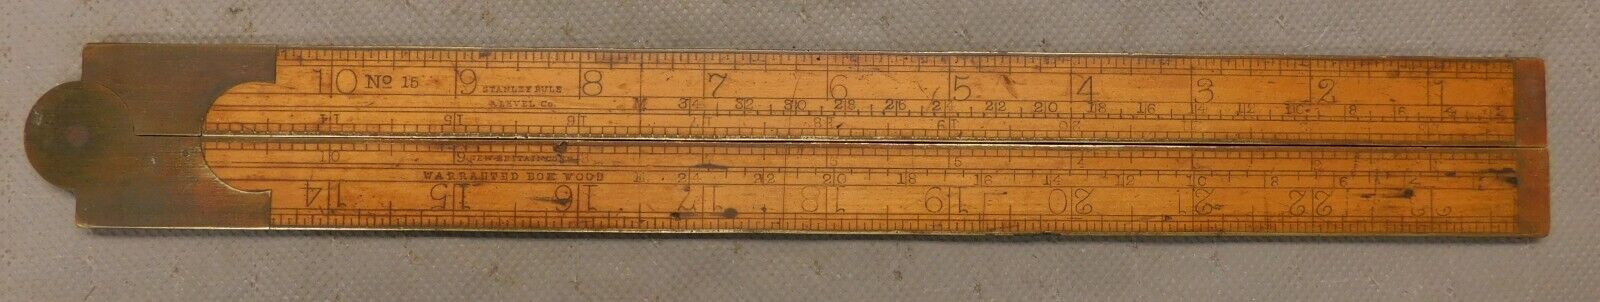 Antique No. 15 Stanley Rule & Level Co. 2' 2 Fold Boxwood Rule w/ Brass Slide